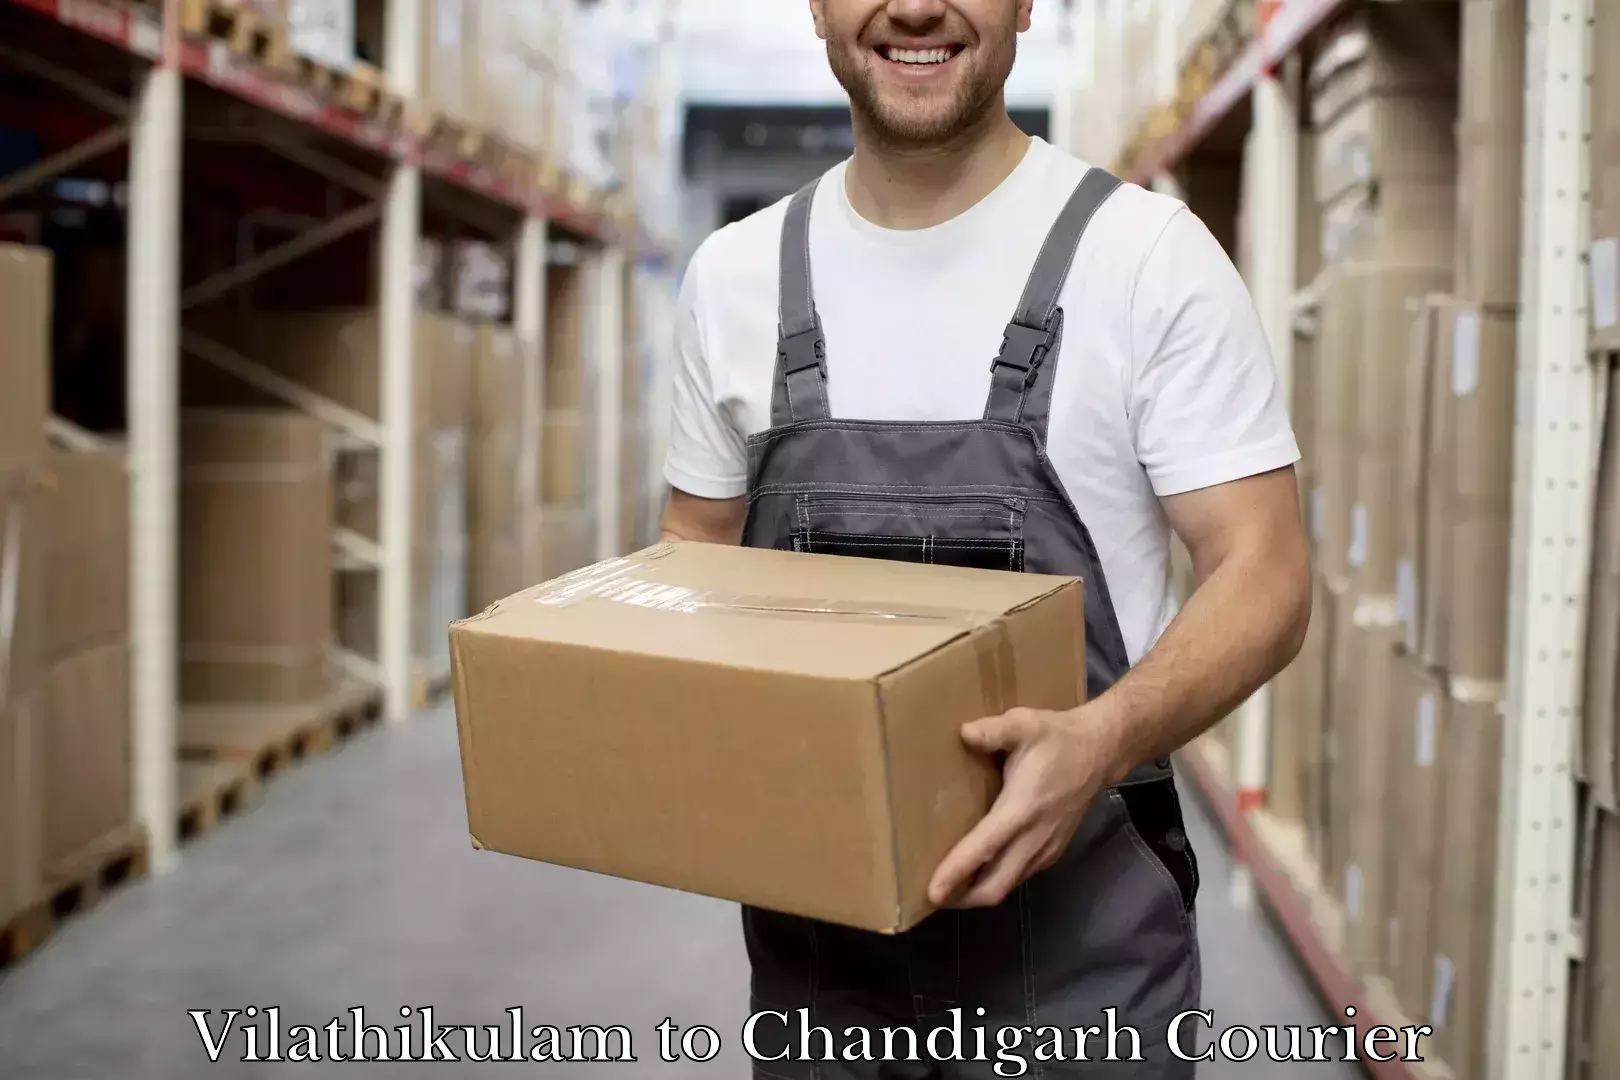 Luggage delivery app Vilathikulam to Chandigarh